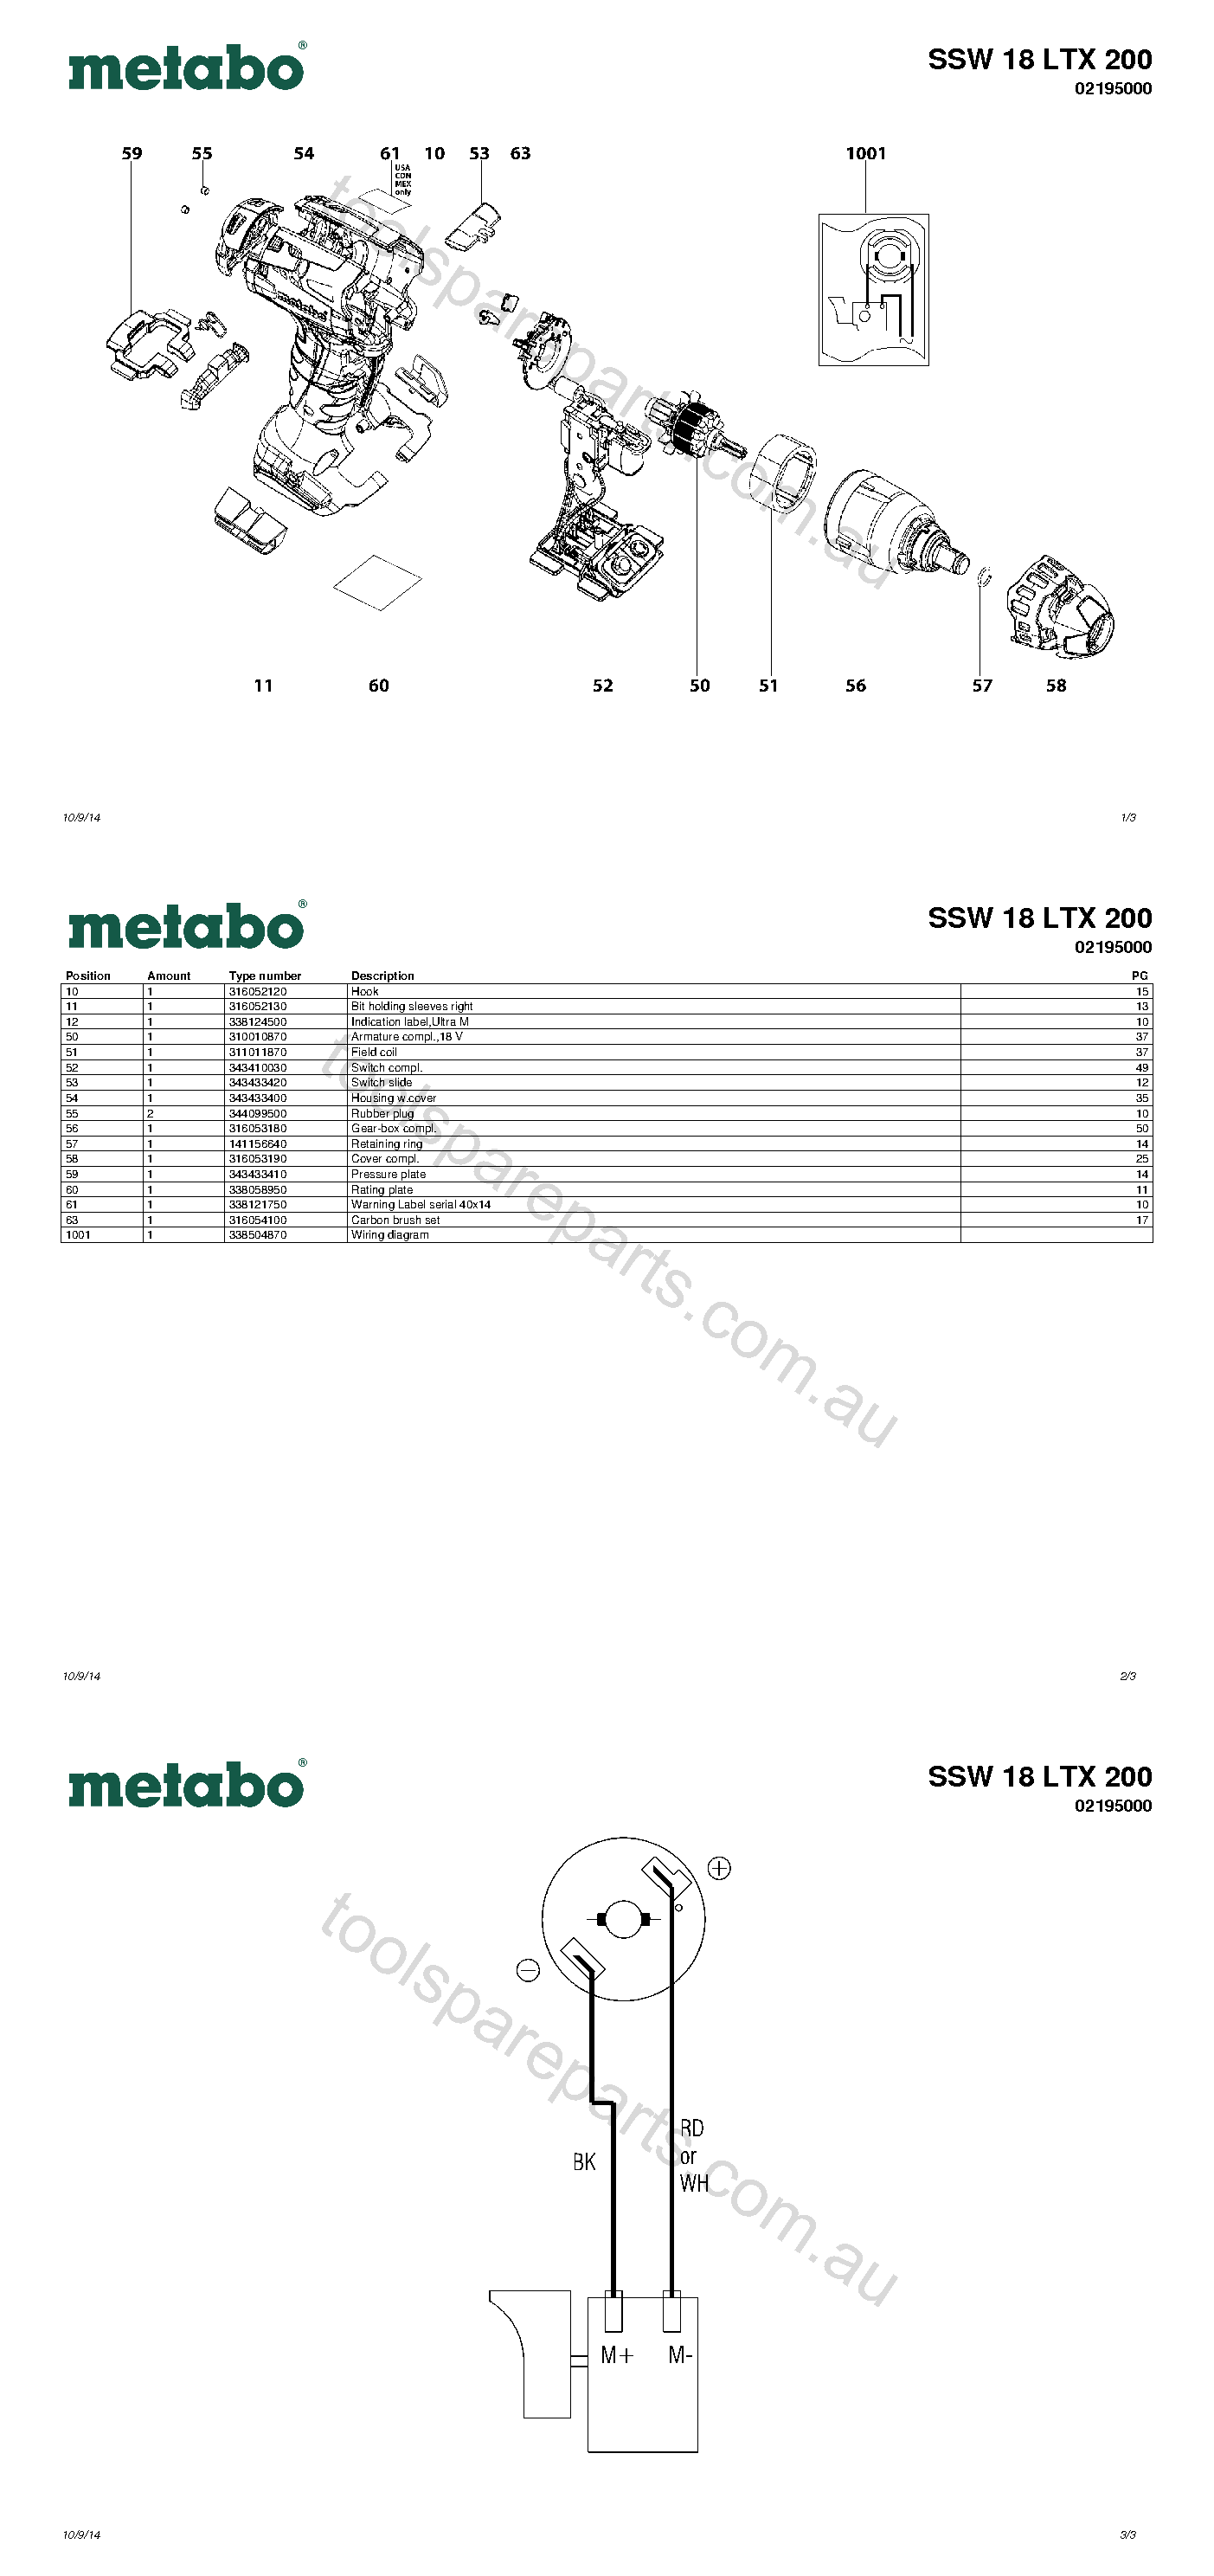 Metabo SSW 18 LTX 200 02195000  Diagram 1